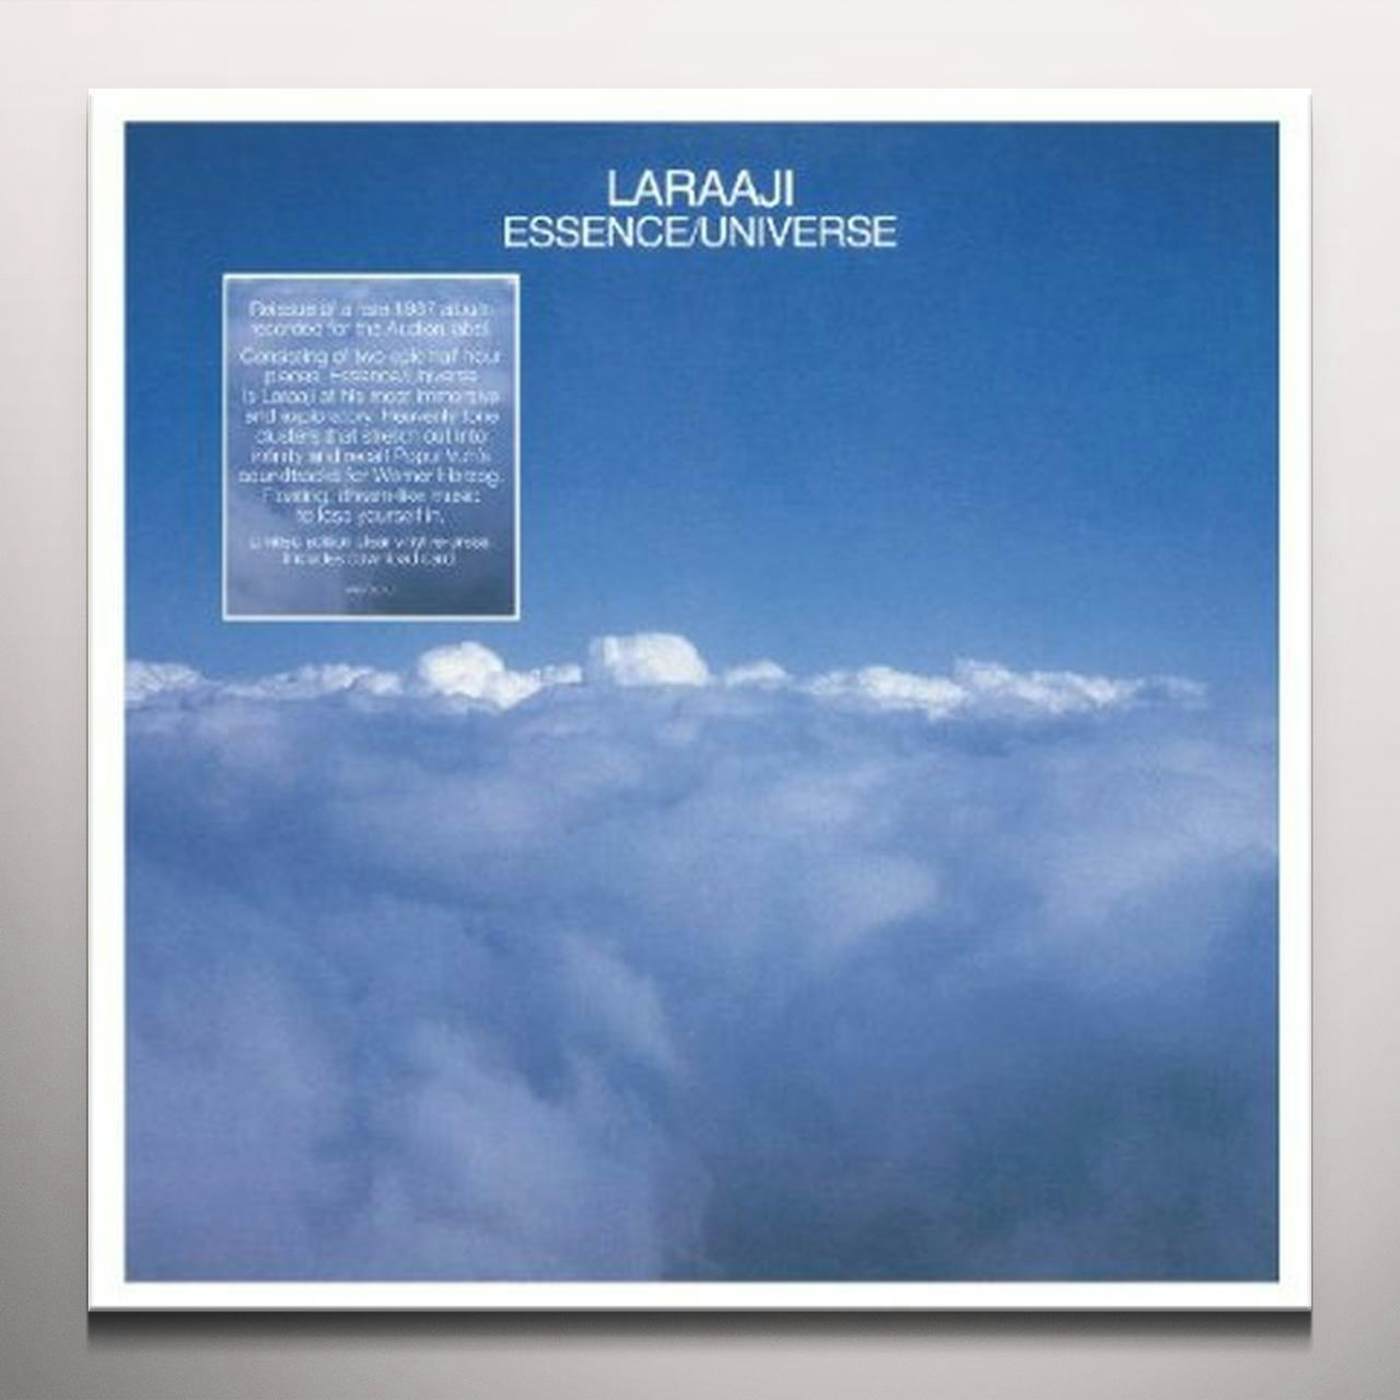 Laraaji Essence/Universe Vinyl Record